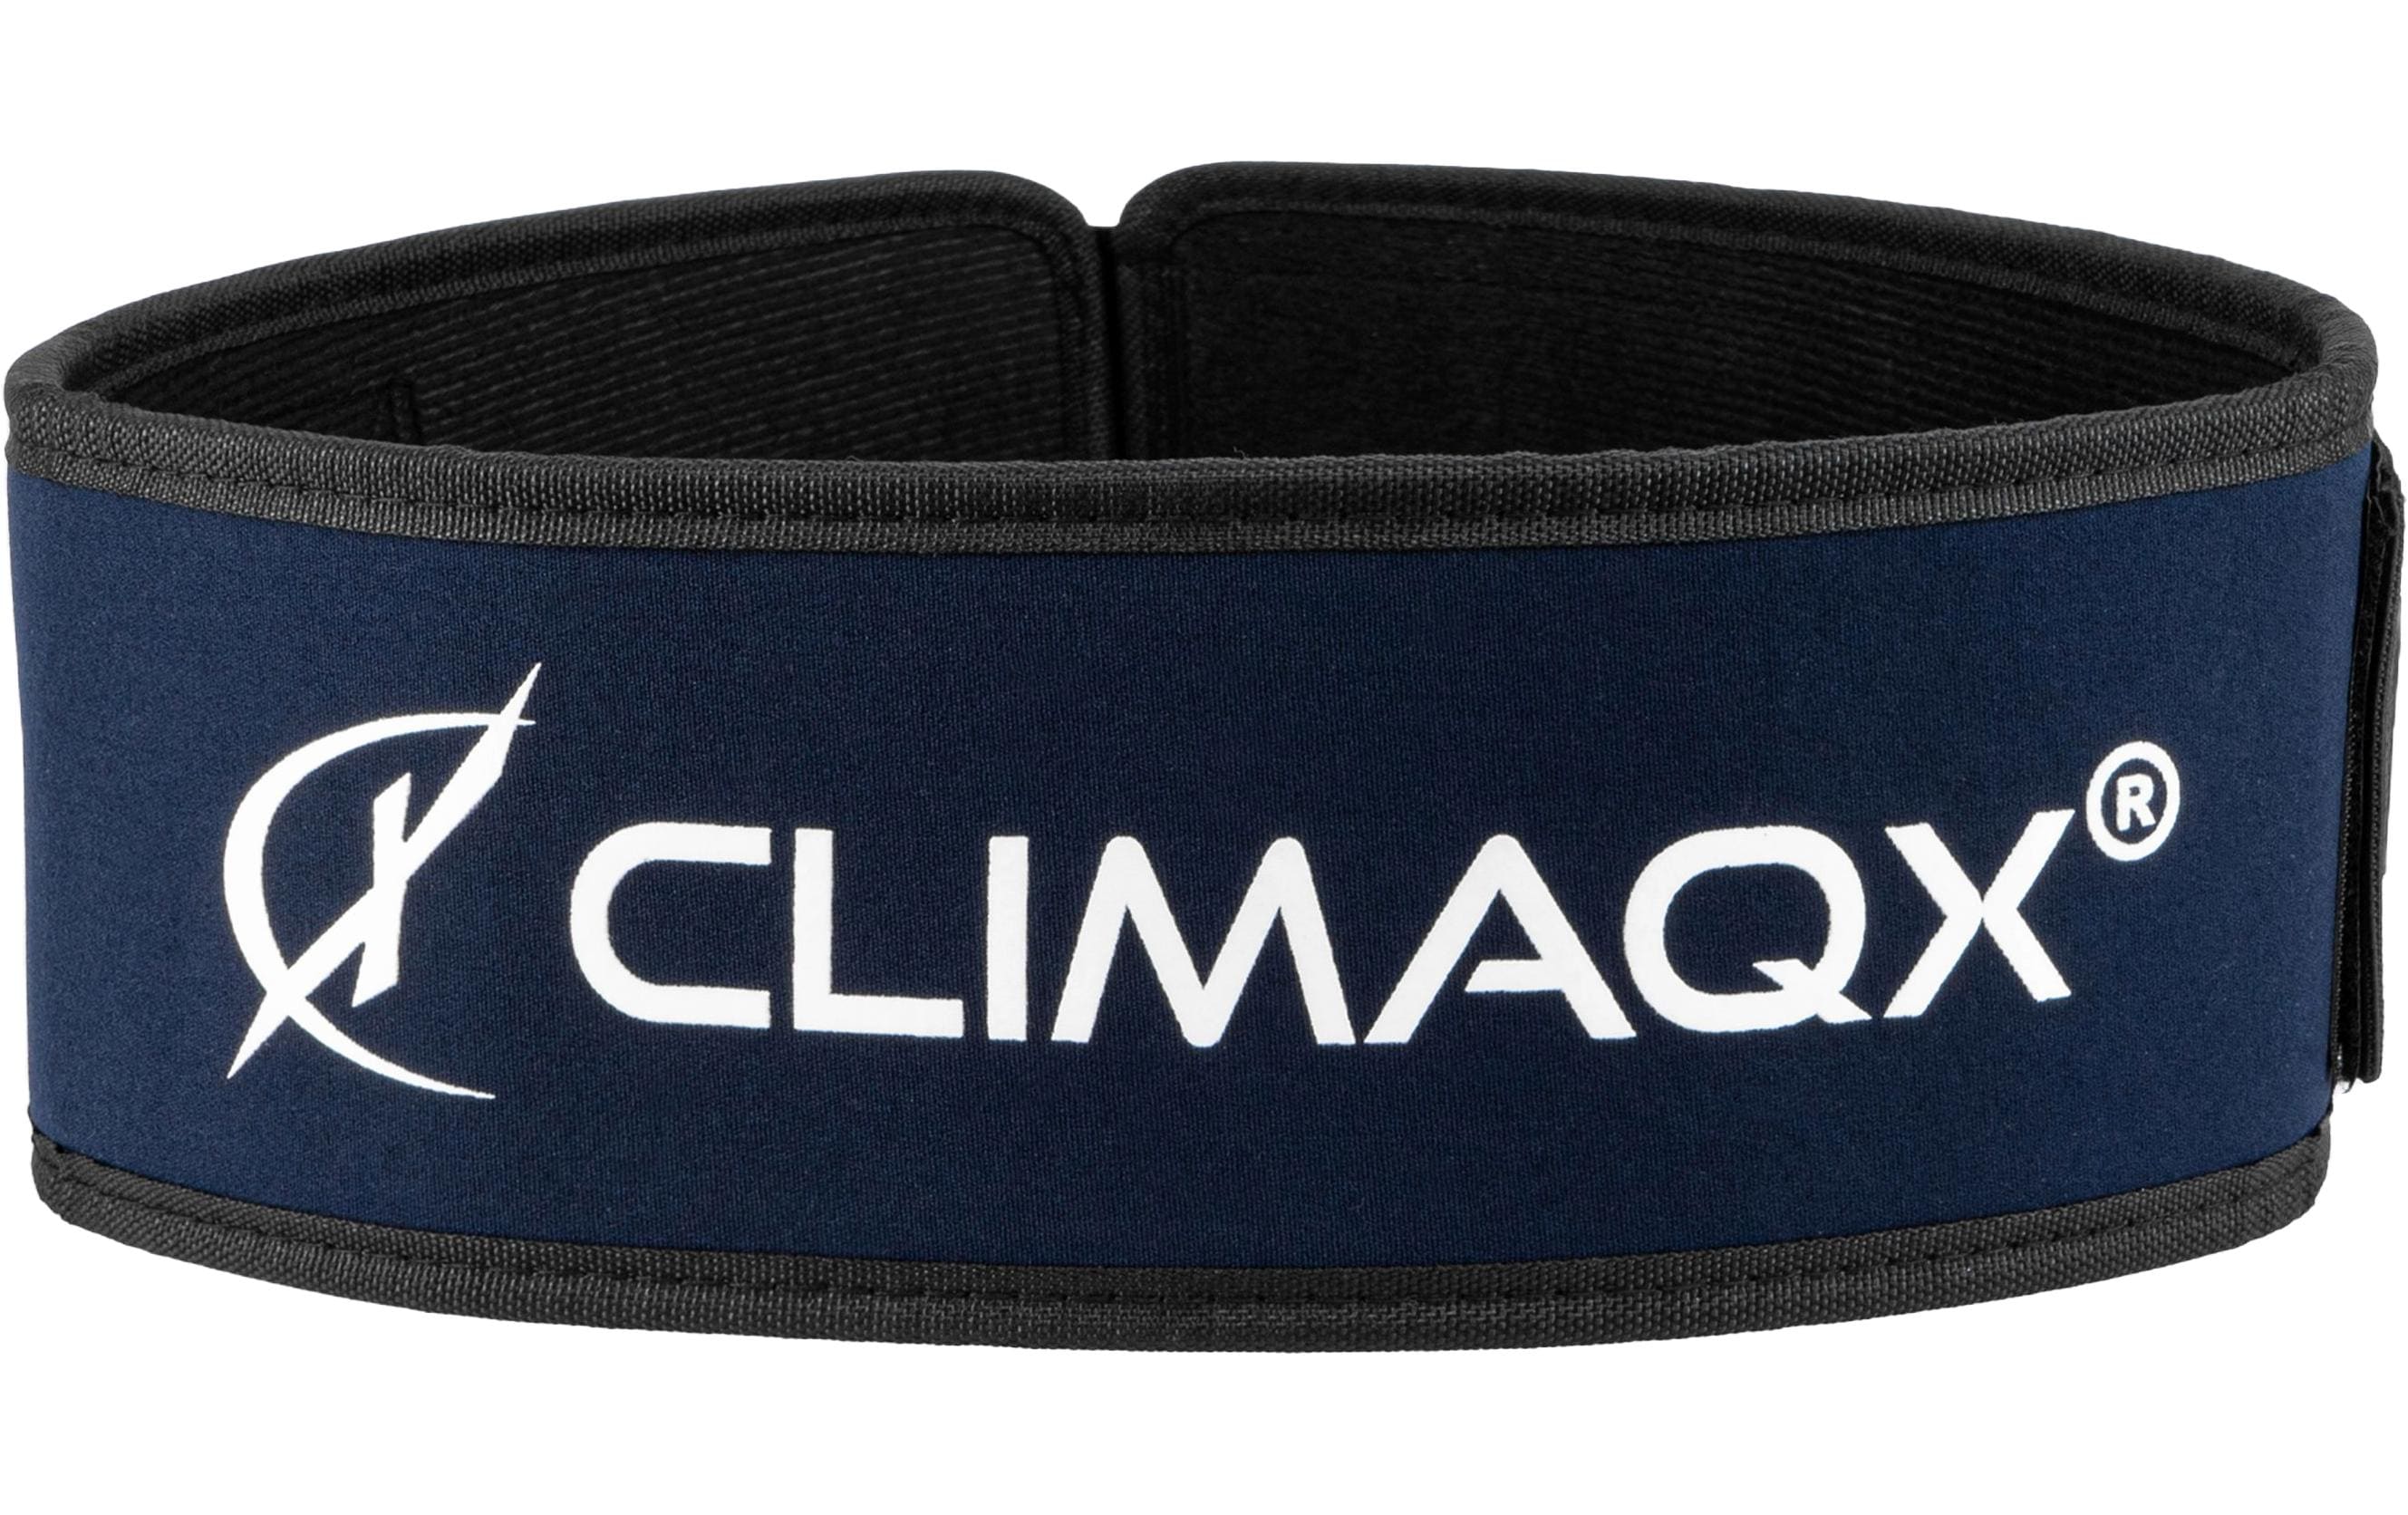 Climaqx Evolution Lifting Belt L